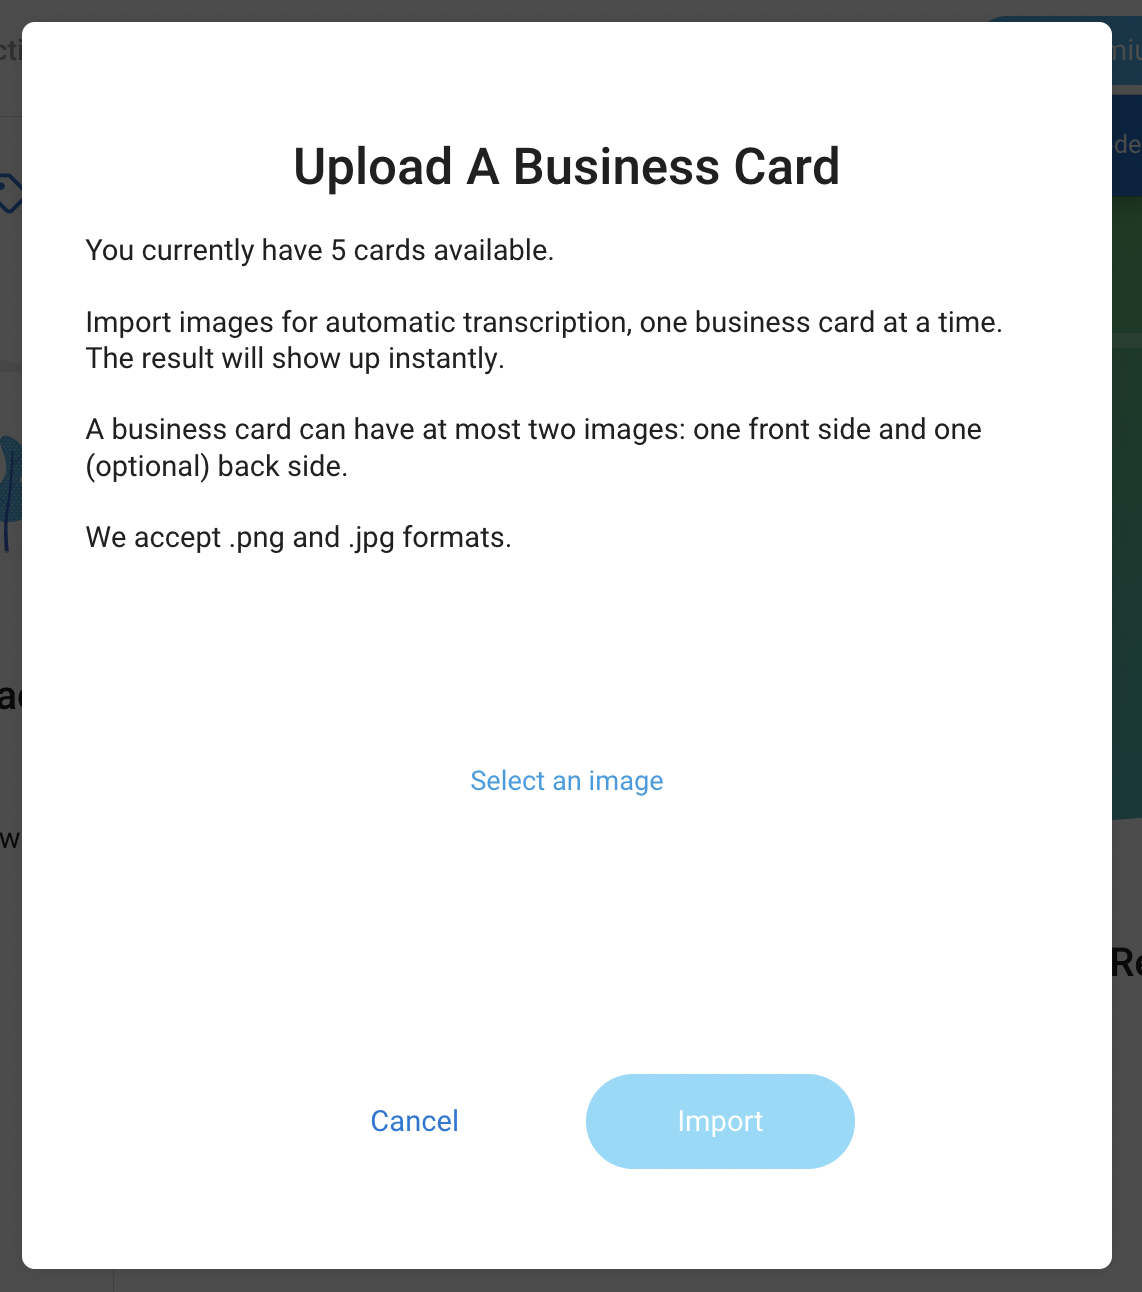 upload-business-card.png